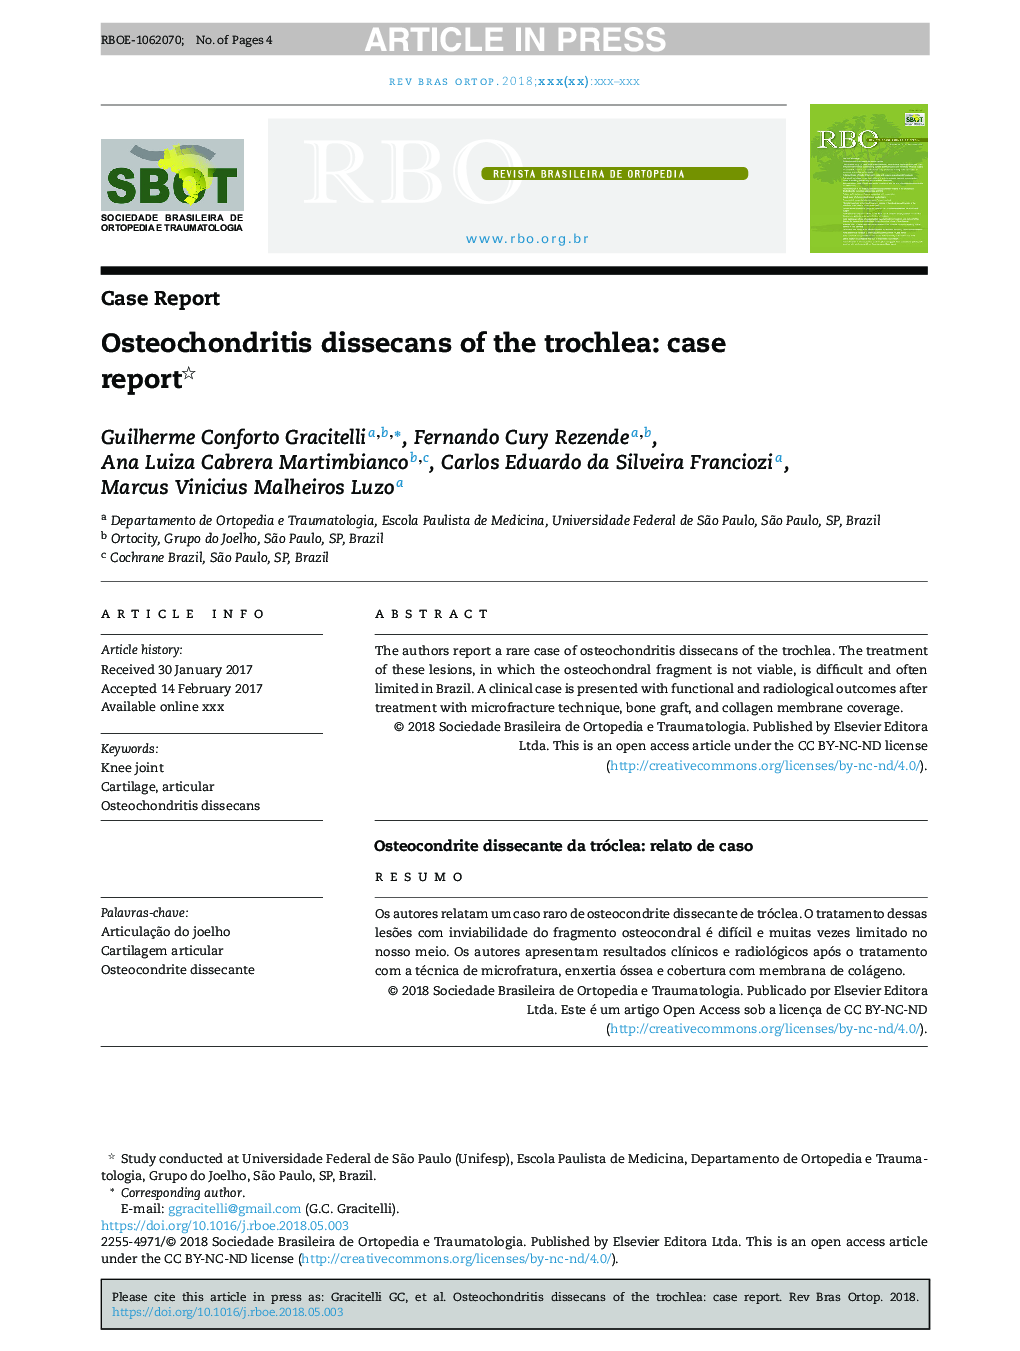 اختلالات استئوخونریت ترولله: گزارش مورد 